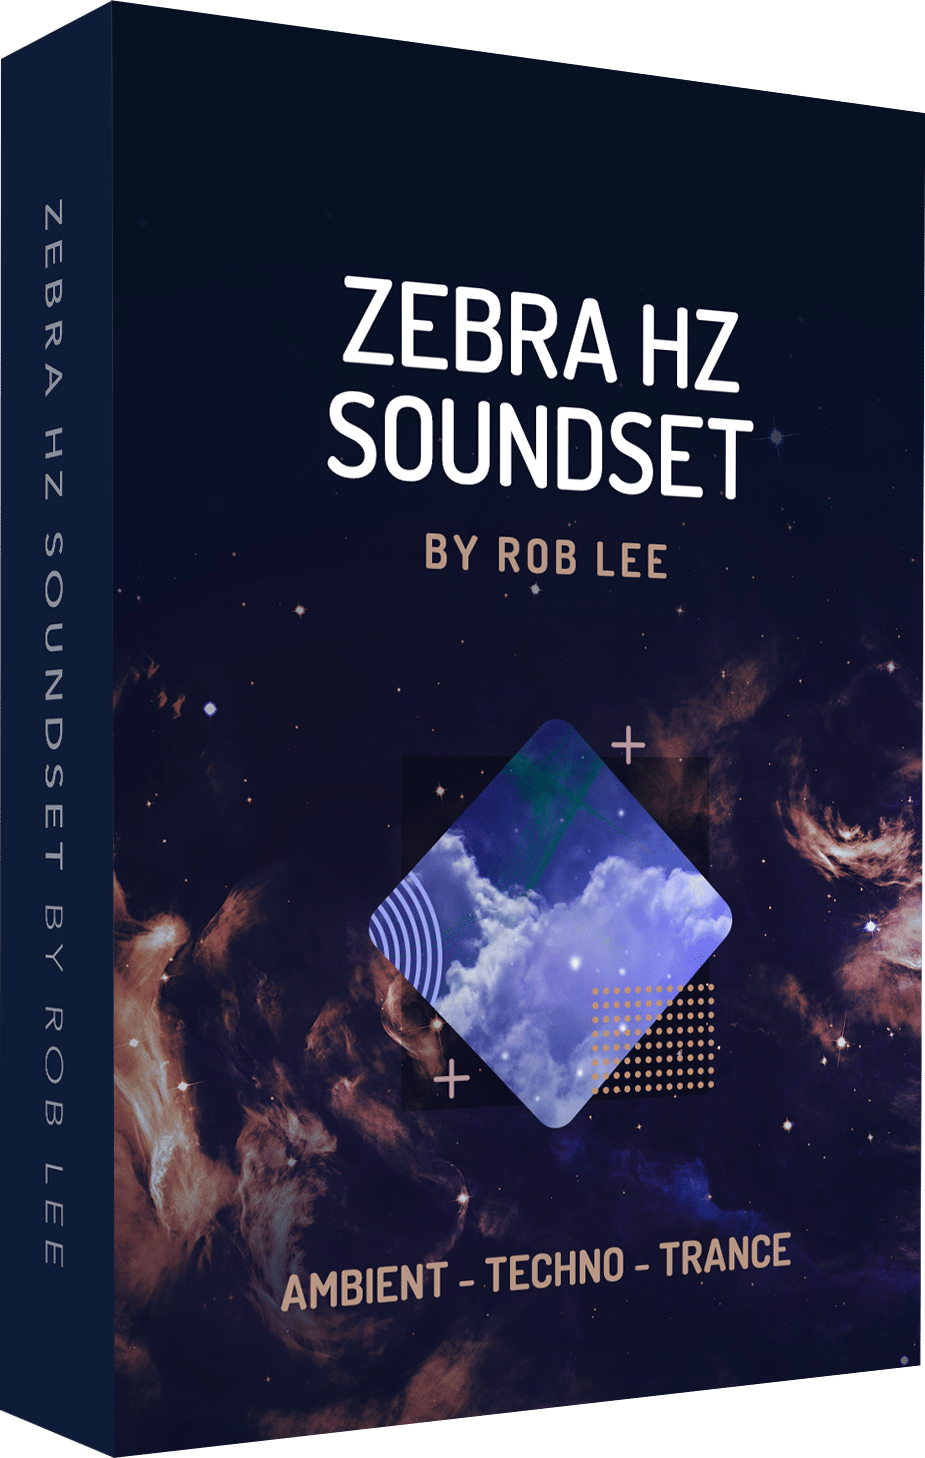 “Sub Zero” Soundset For Zebra HZ